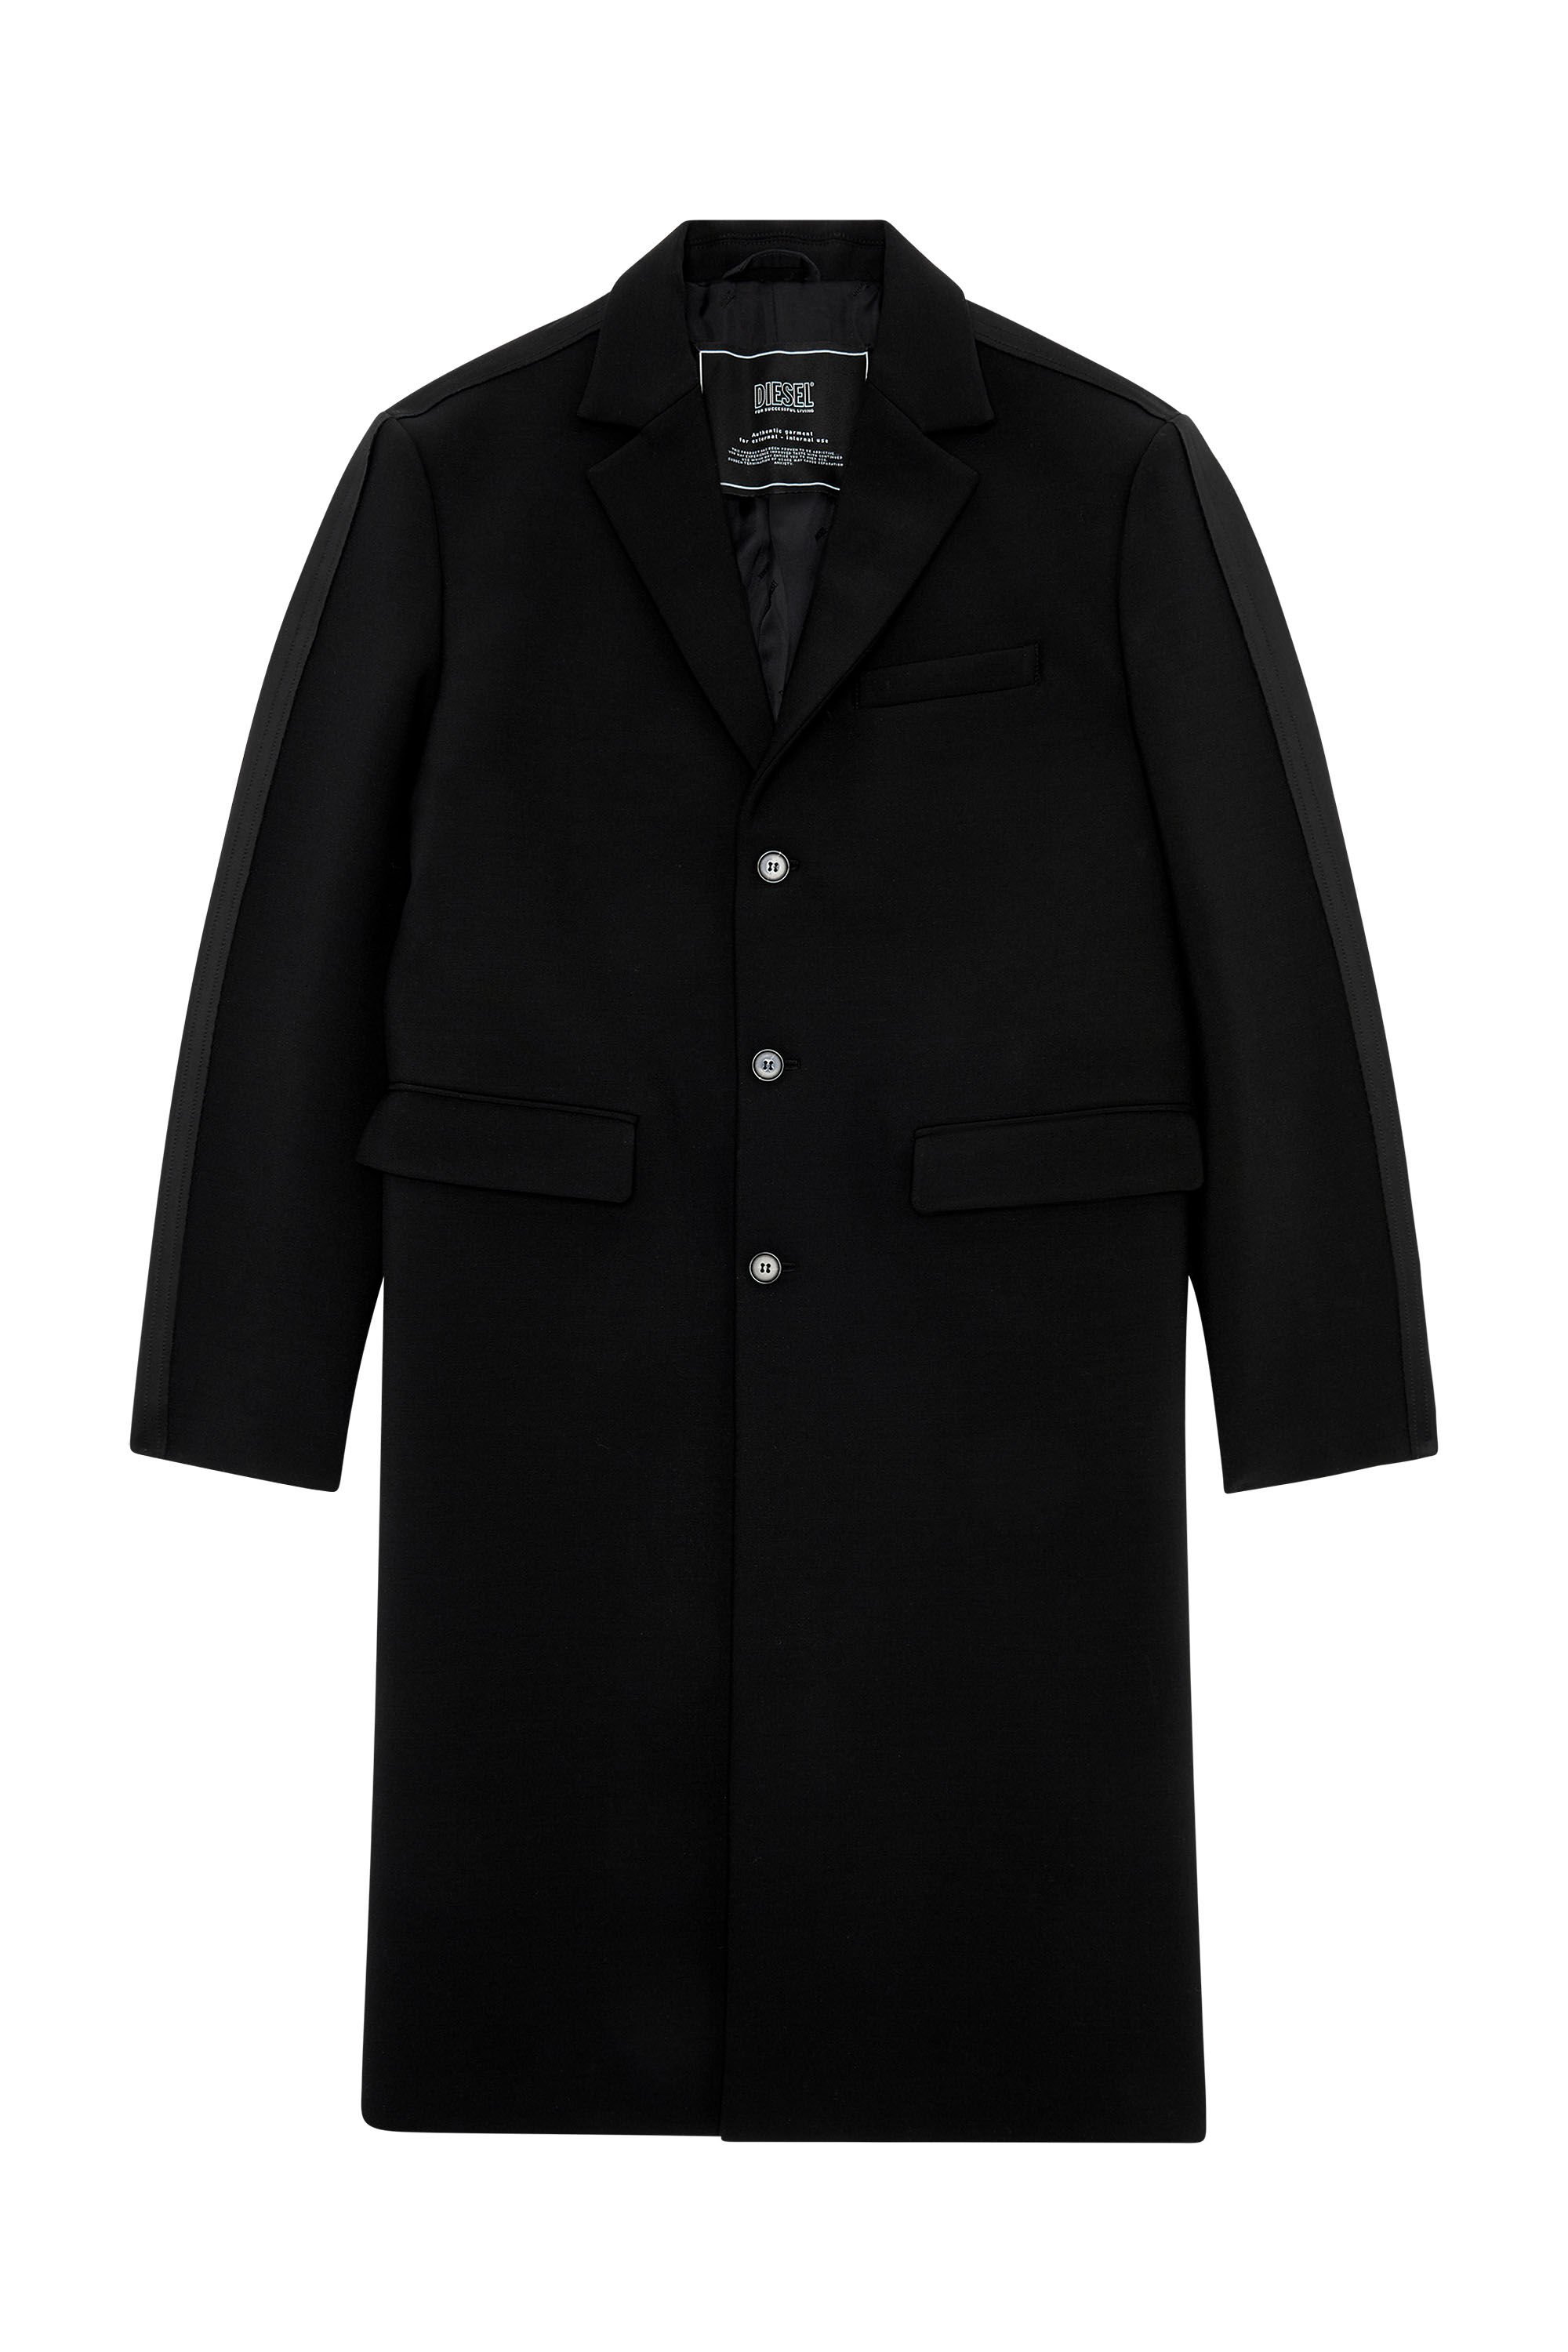 Diesel - J-DELLER, Man Hybrid coat in cool wool and jersey in Black - Image 2